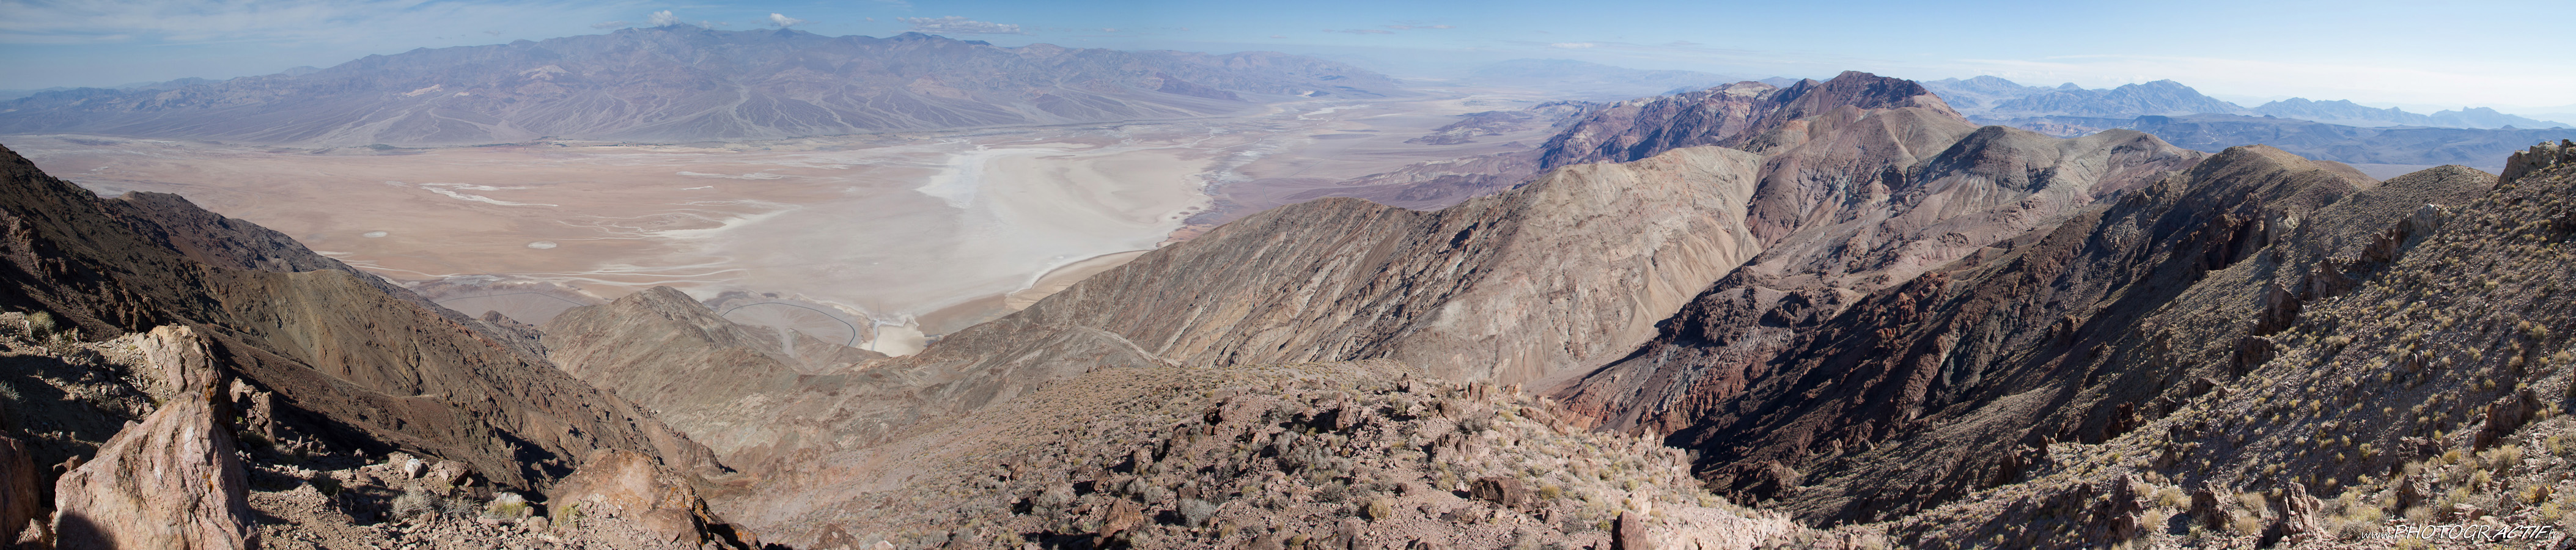 2-Death Valley (6)